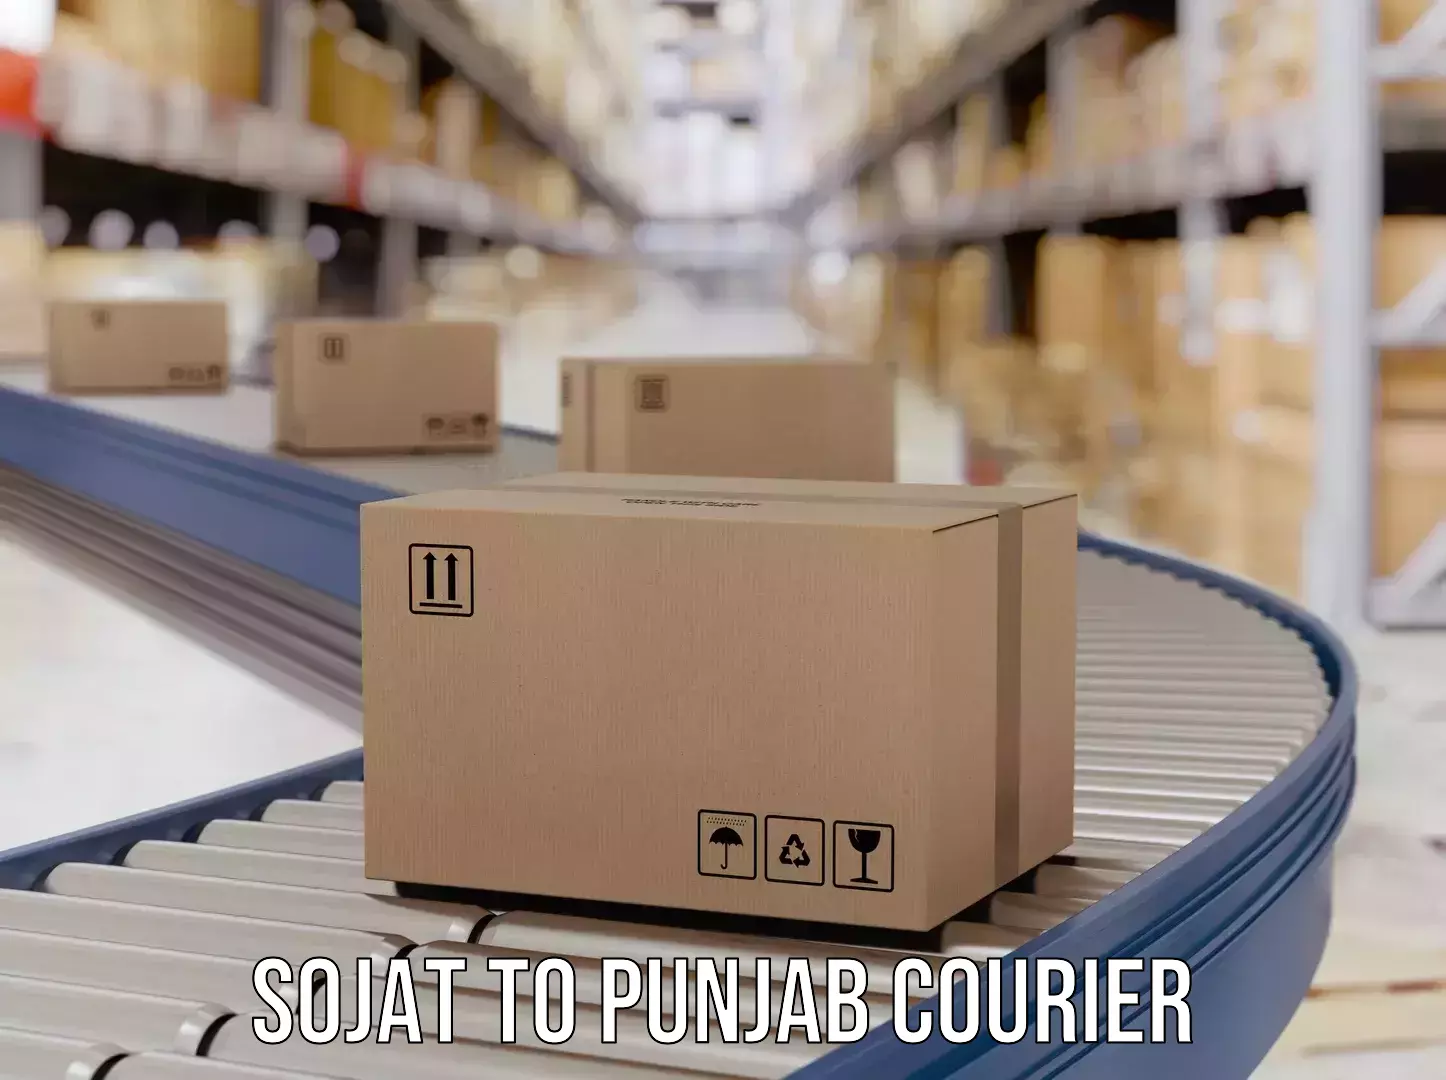 Quality courier partnerships Sojat to Punjab